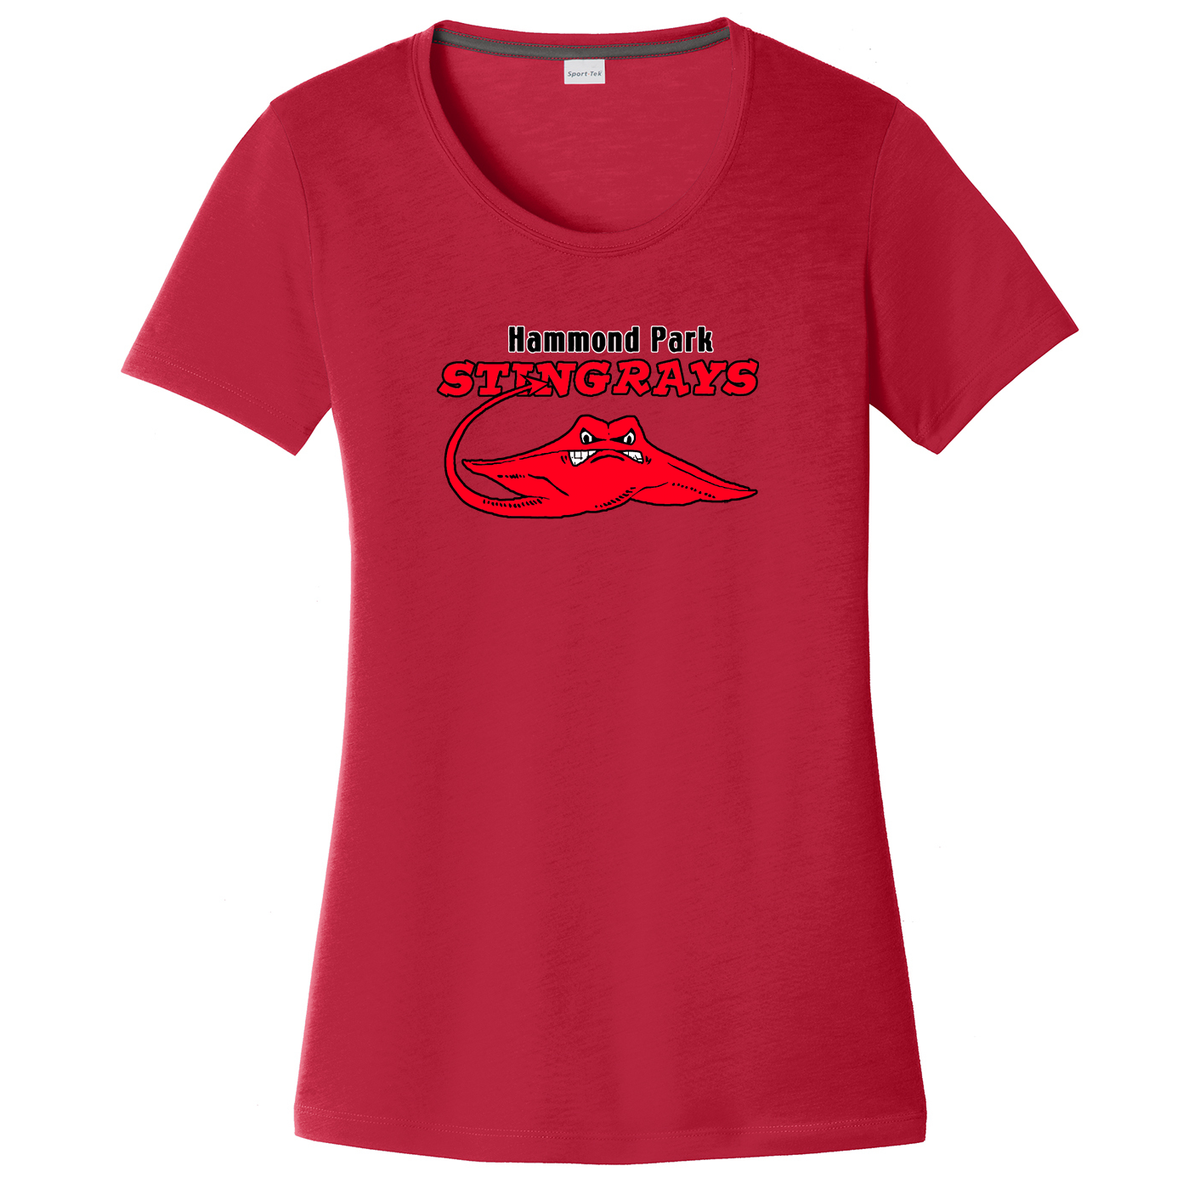 Hammond Park Stingrays Women's CottonTouch Performance T-Shirt